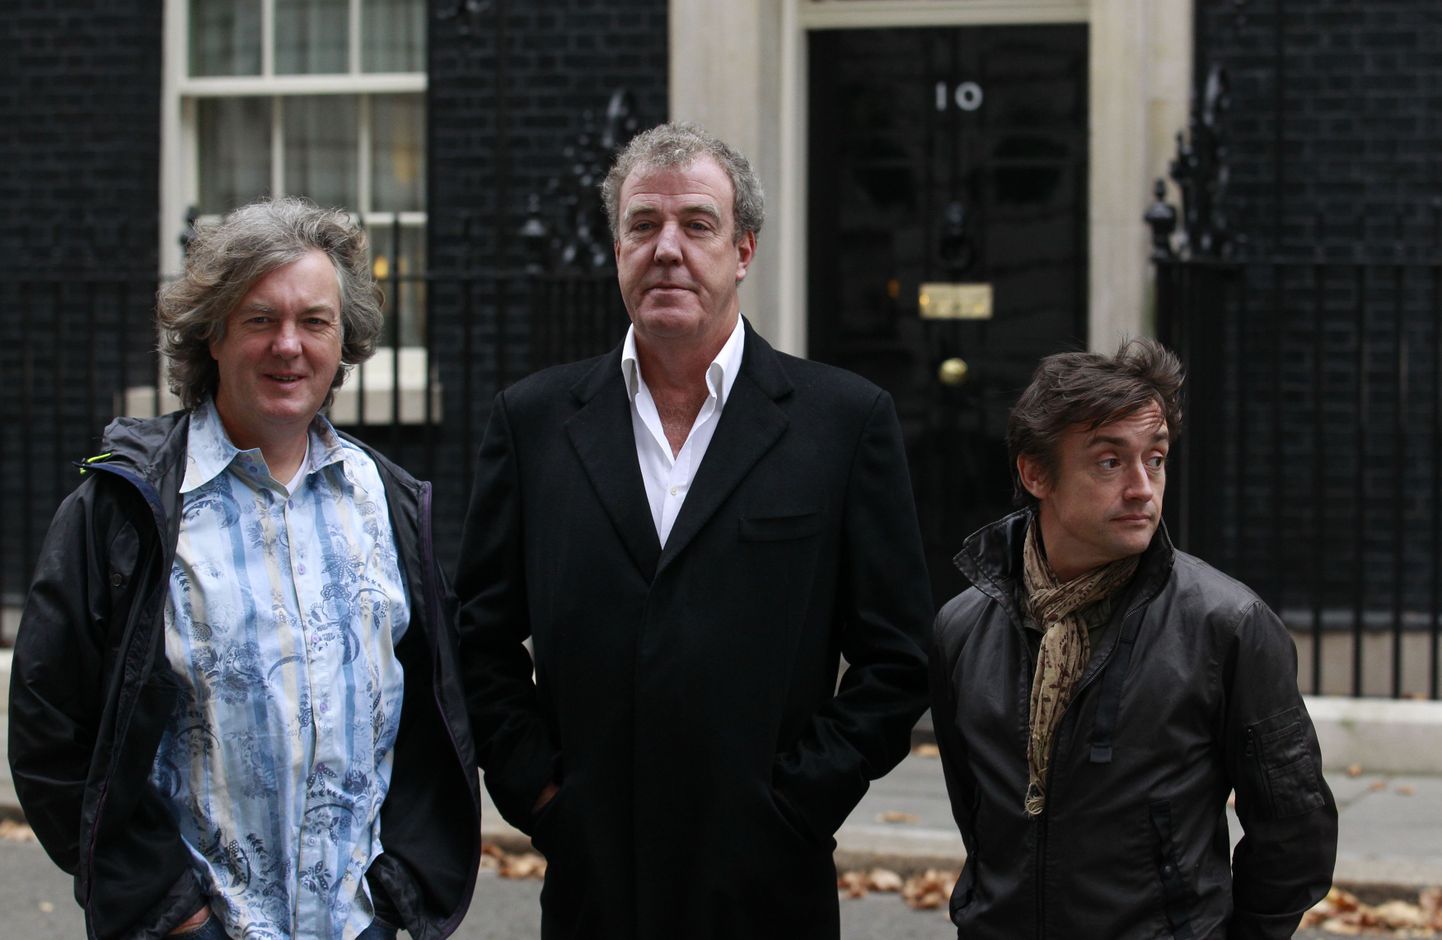 James May, Jeremy Clarkson, Richard Hammond